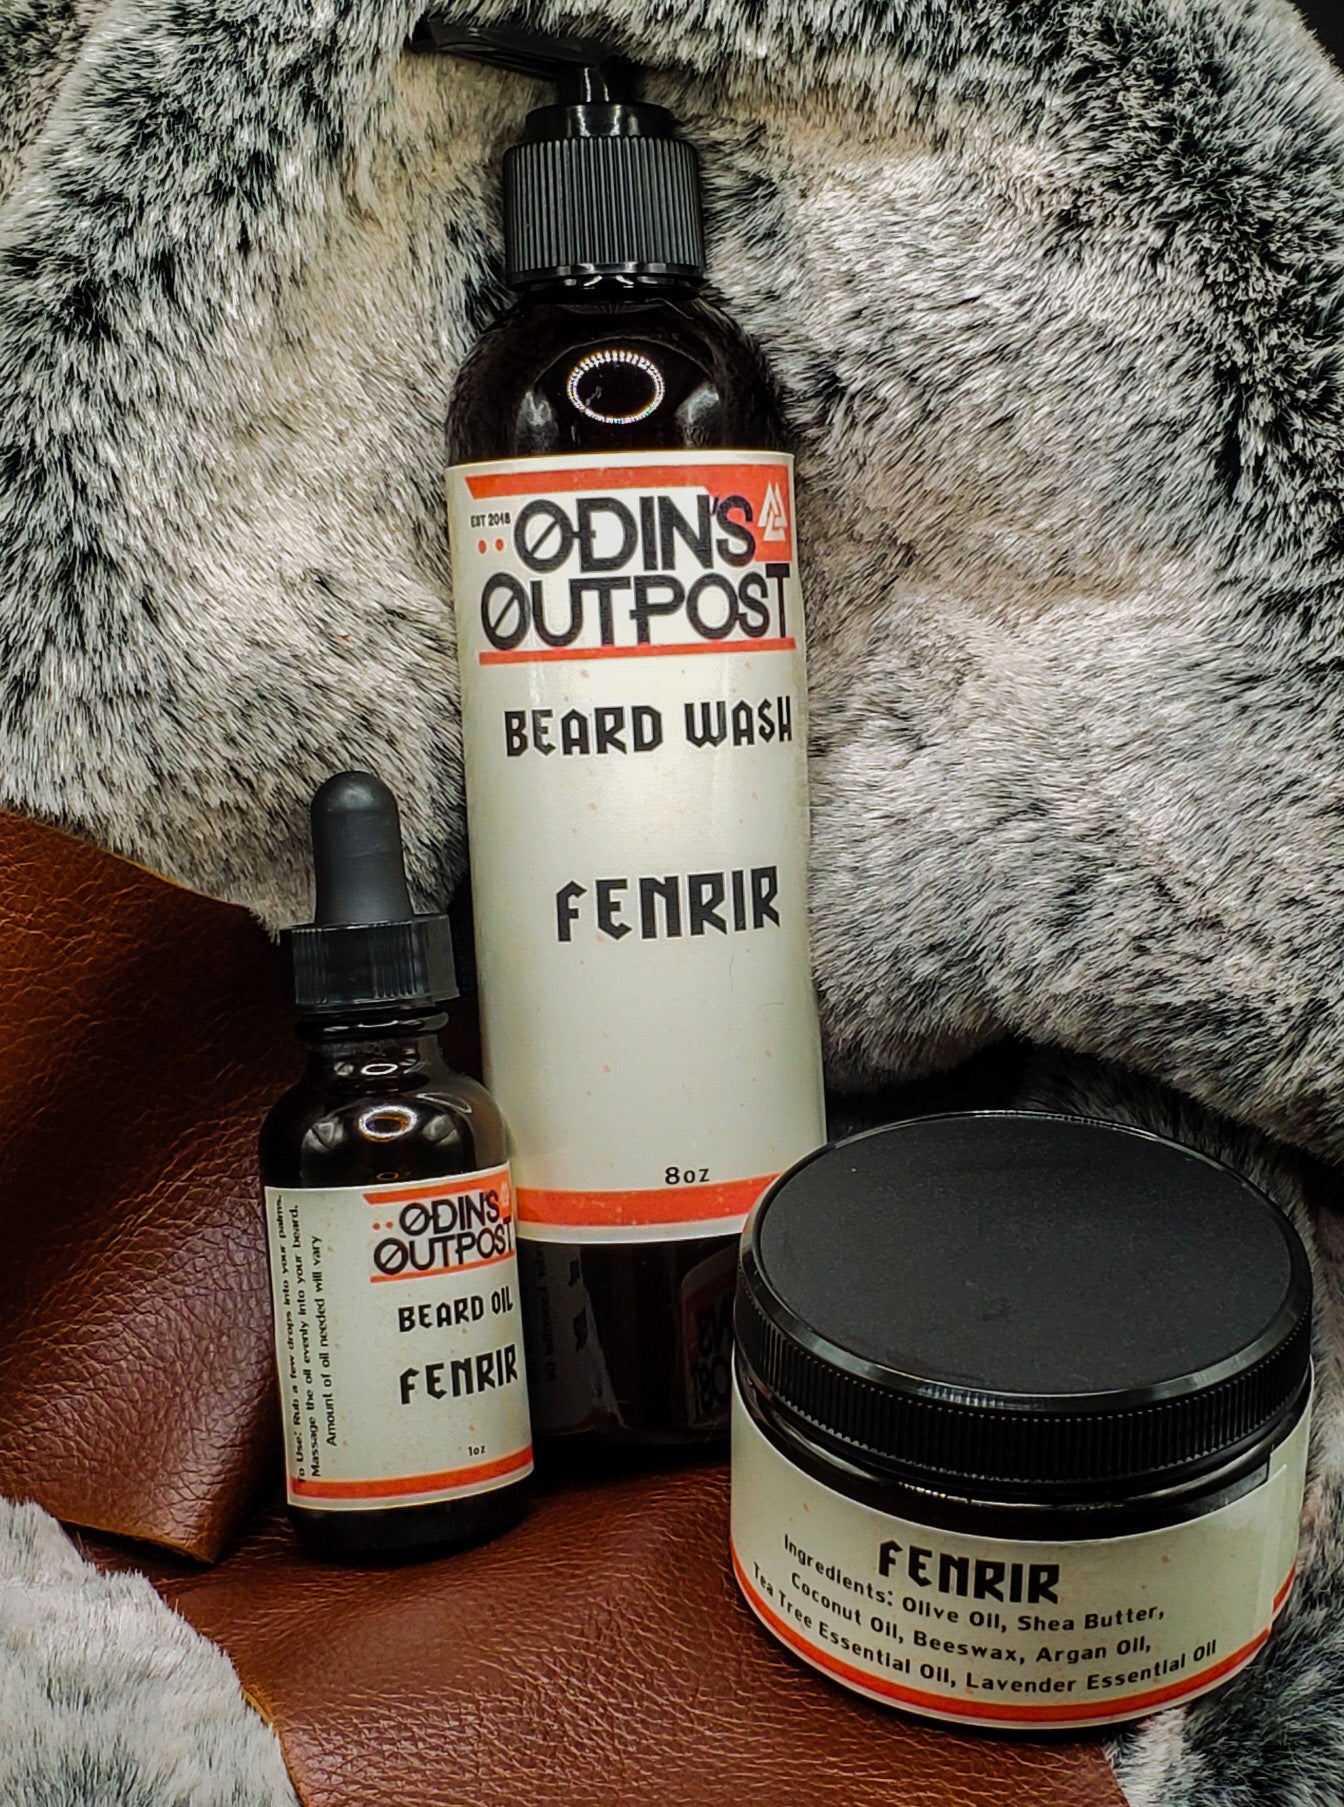 Fenrir Beard Grooming Set // Beard Oil Beard Balm Beard Shampoo // Tea Tree and Lavender Scented